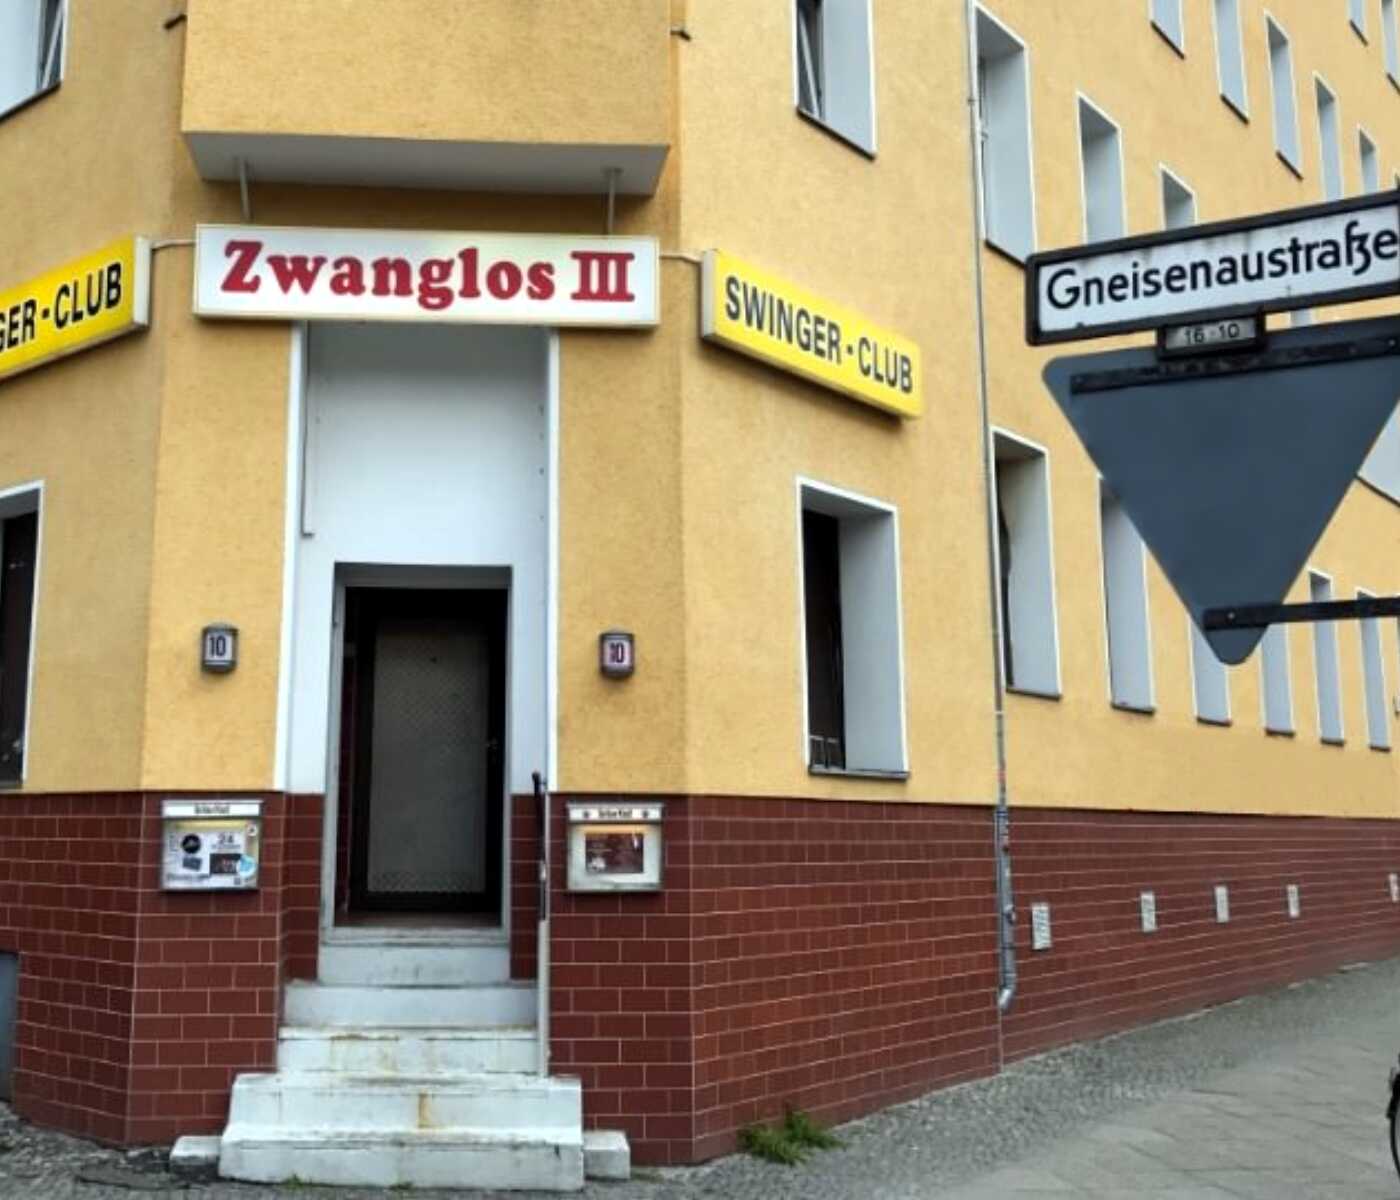 Eingang des Swingerclubs Zwanglos in Berlin-Kreuzberg